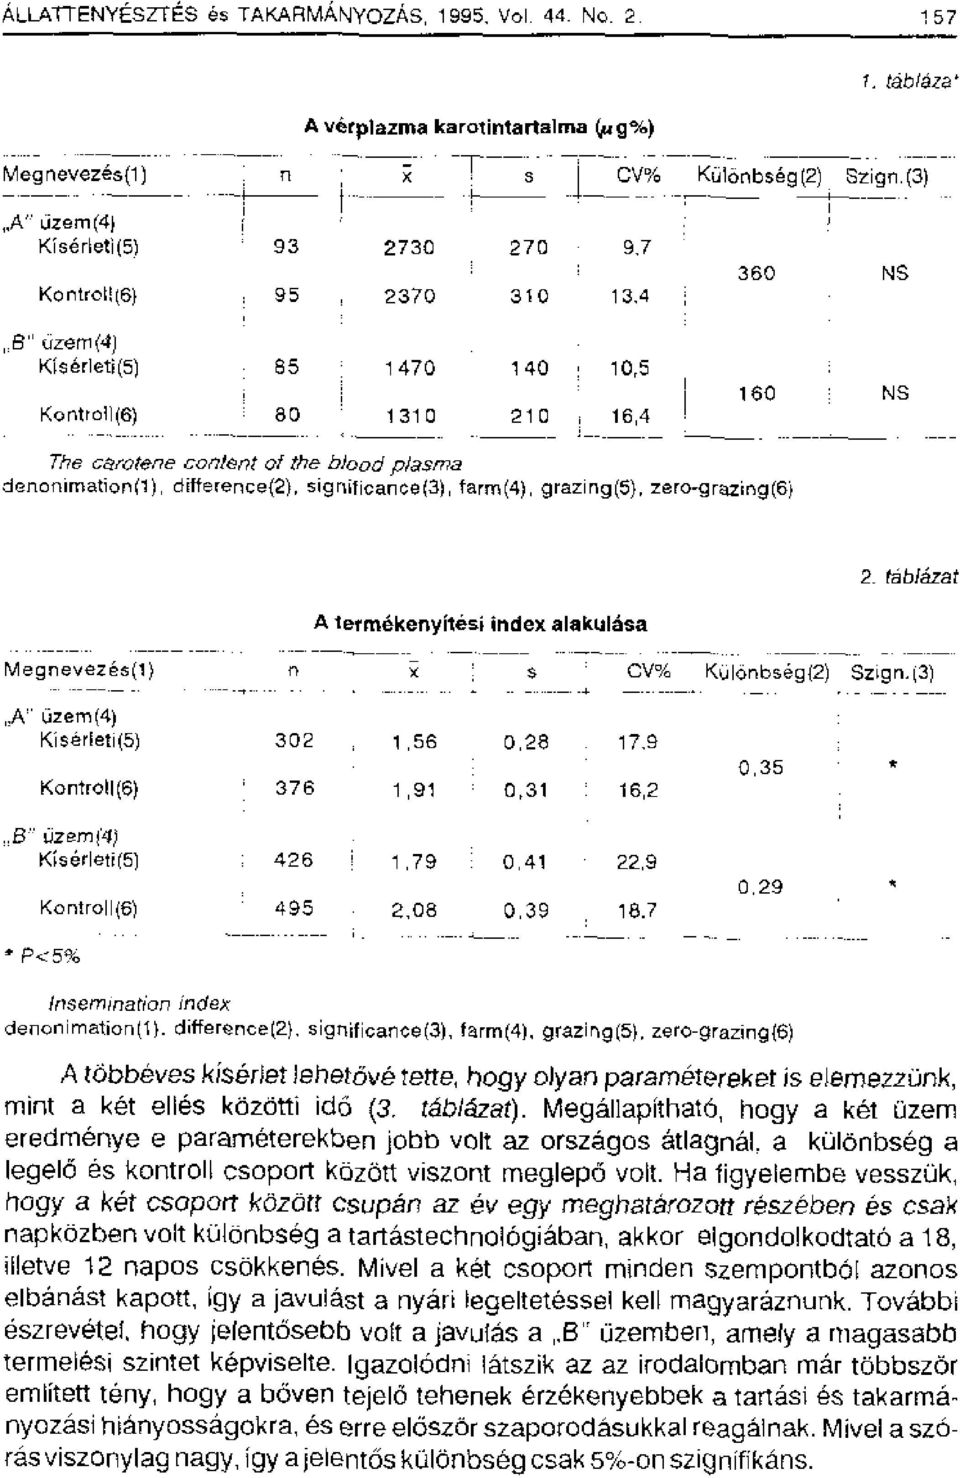 lizern (4) Kiserleti(5) Kontroll(6) : 85 1470 140, 10 r 5 1 80 1310 210 i 16,4 1 160 NS The carotene contont of the blood plasma denonirnation(i), ditference(2), signi1icanoe(3), tarm(4), grazing(5),